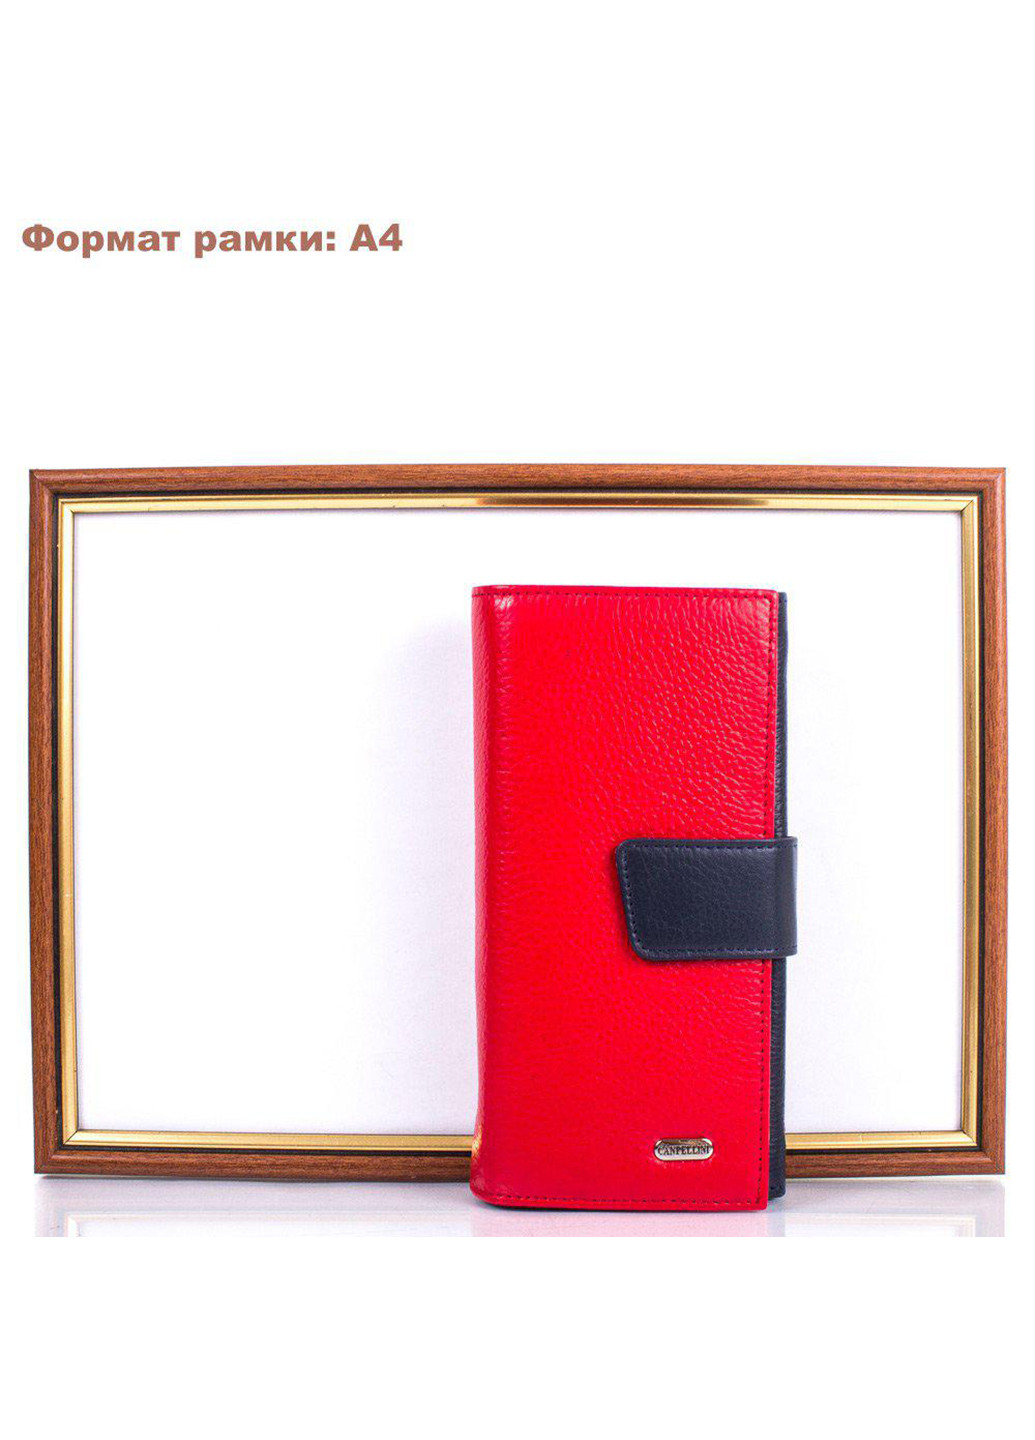 Женский кожаный кошелек 9,7х19х3,6 см Canpellini (252133785)